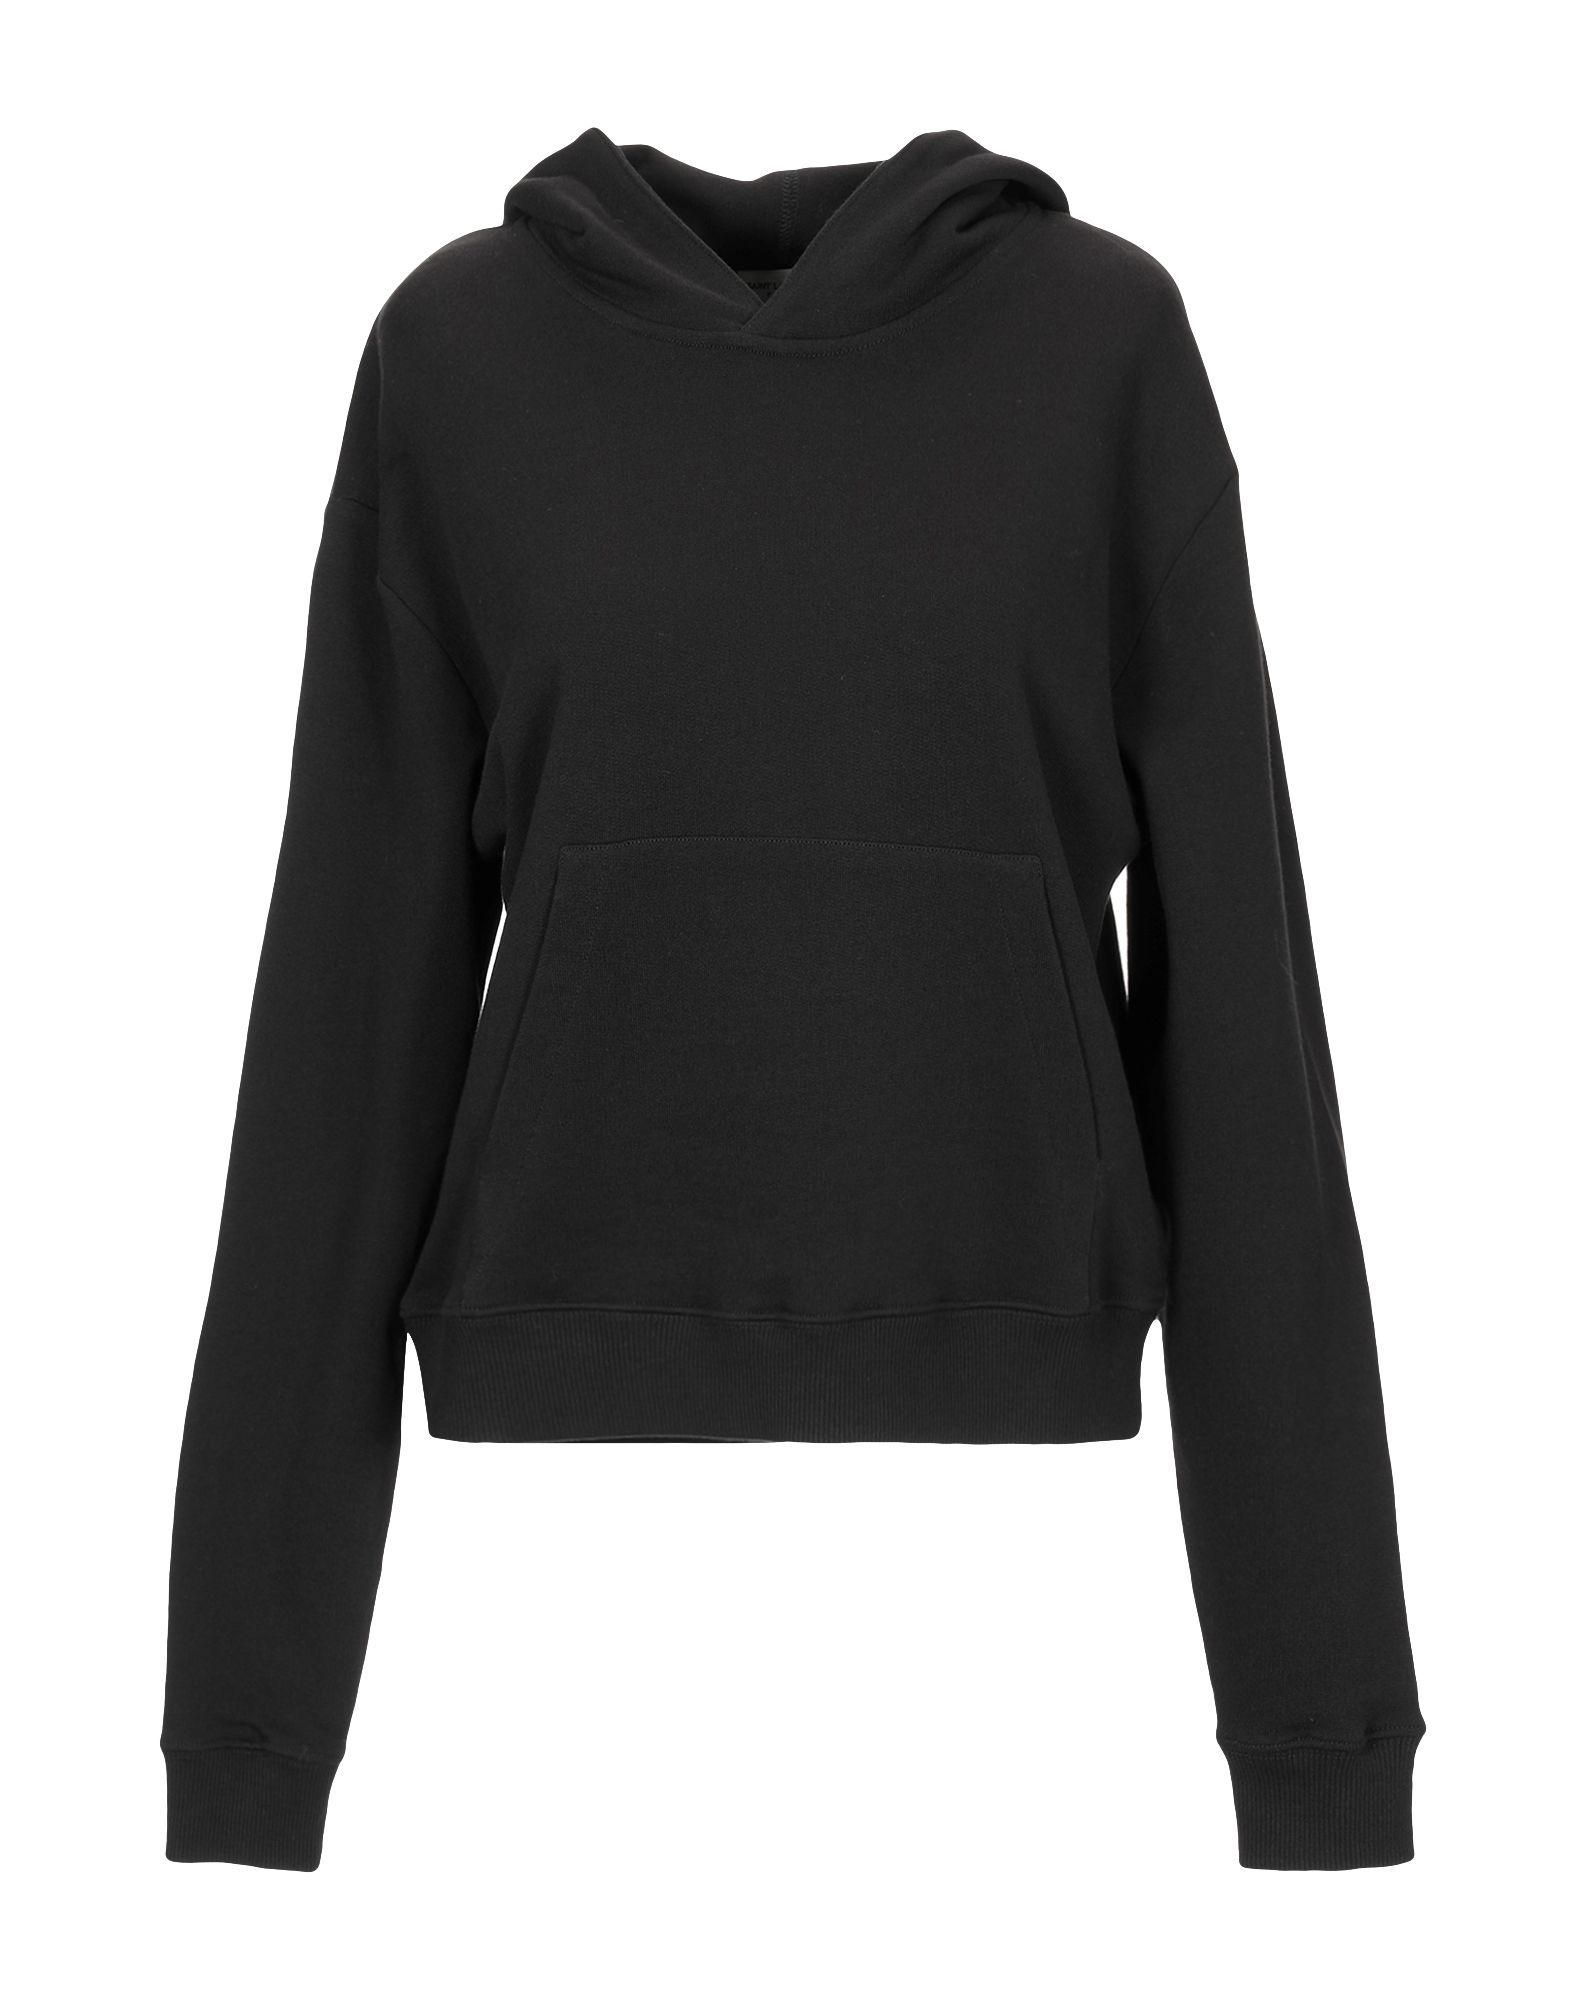 Saint Laurent Cotton Sweatshirt in Black - Lyst